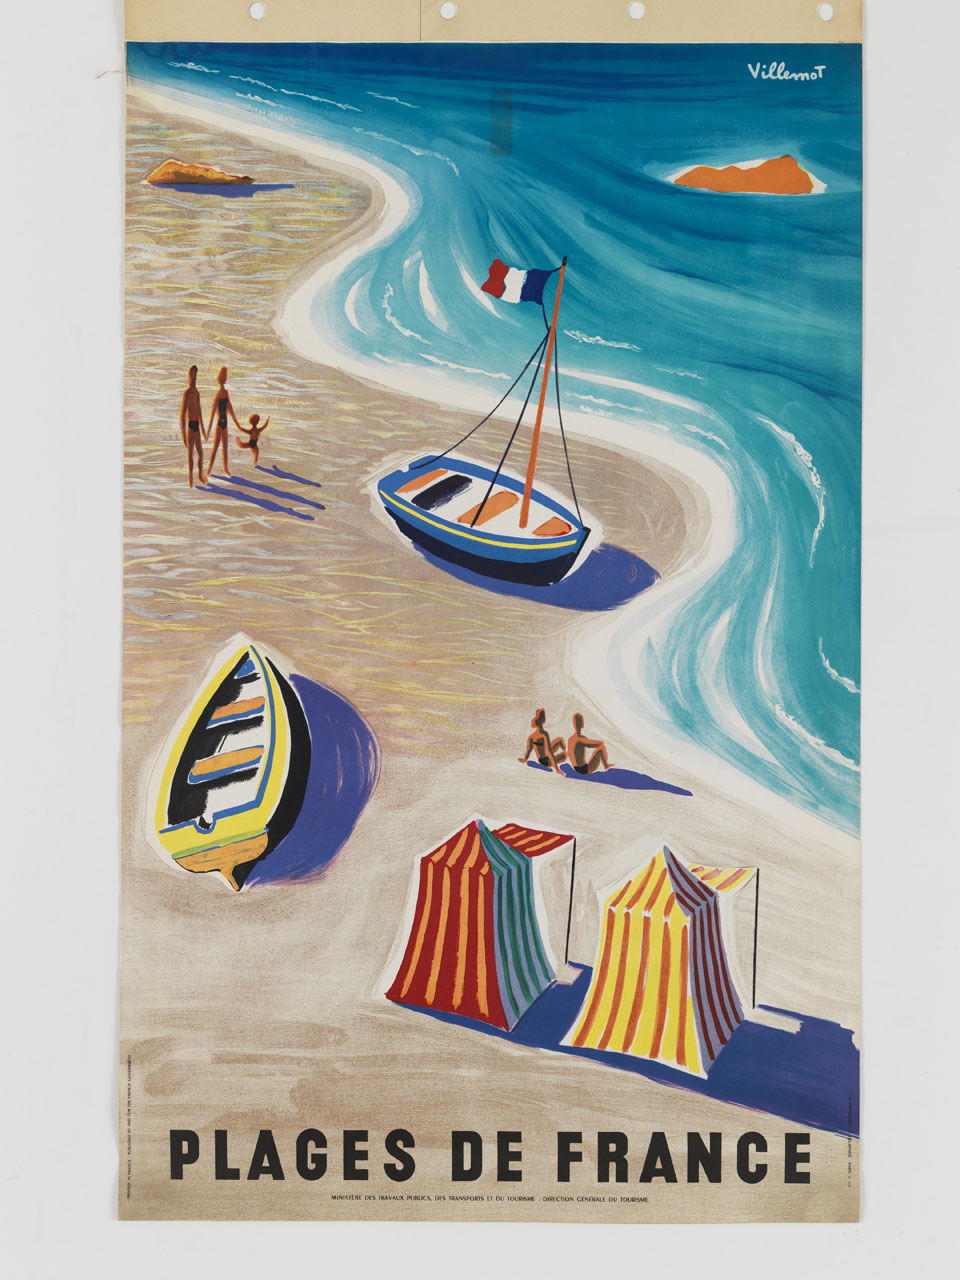 spiaggia con barche, tende e bagnanti (manifesto) di Villemot Bernard (sec. XX)